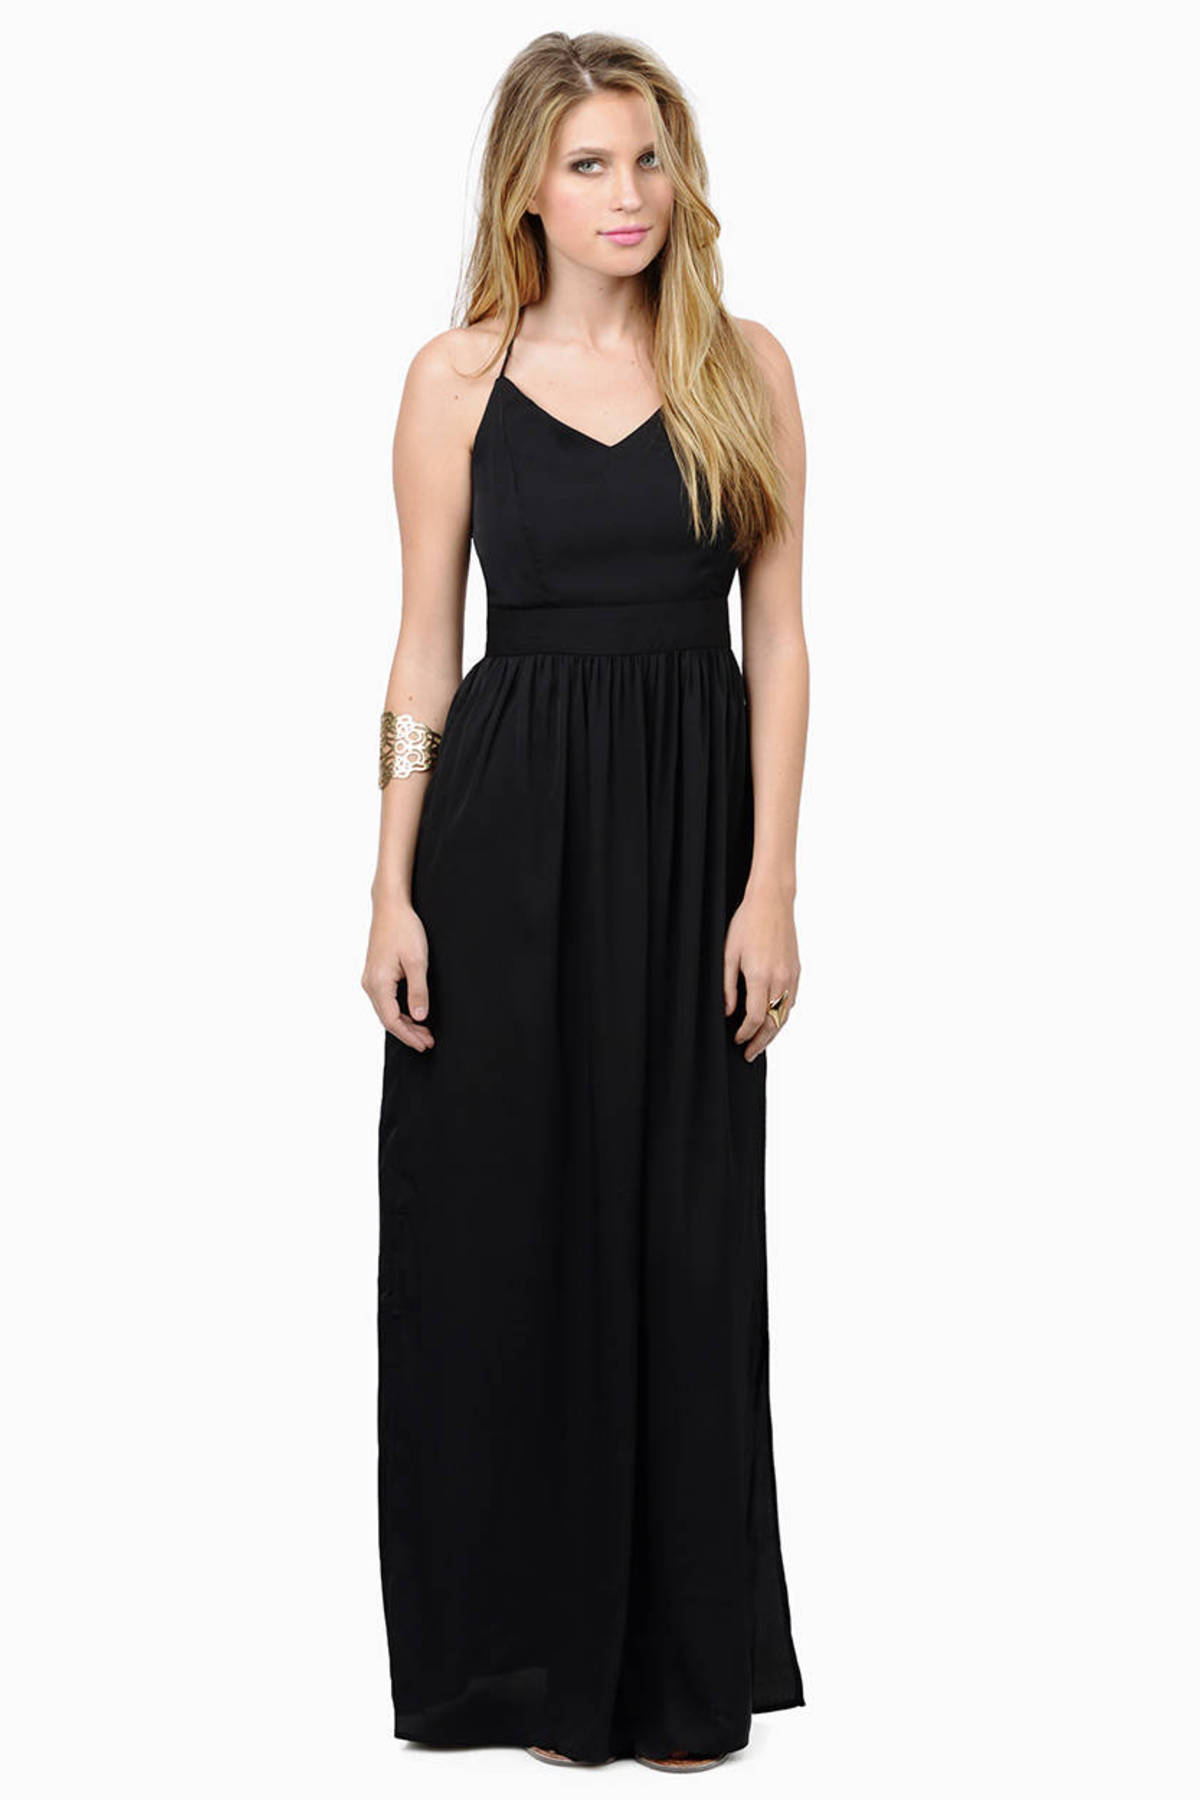 Black Maxi Dress - Backless Dress - V Neck Black Maxi Dress